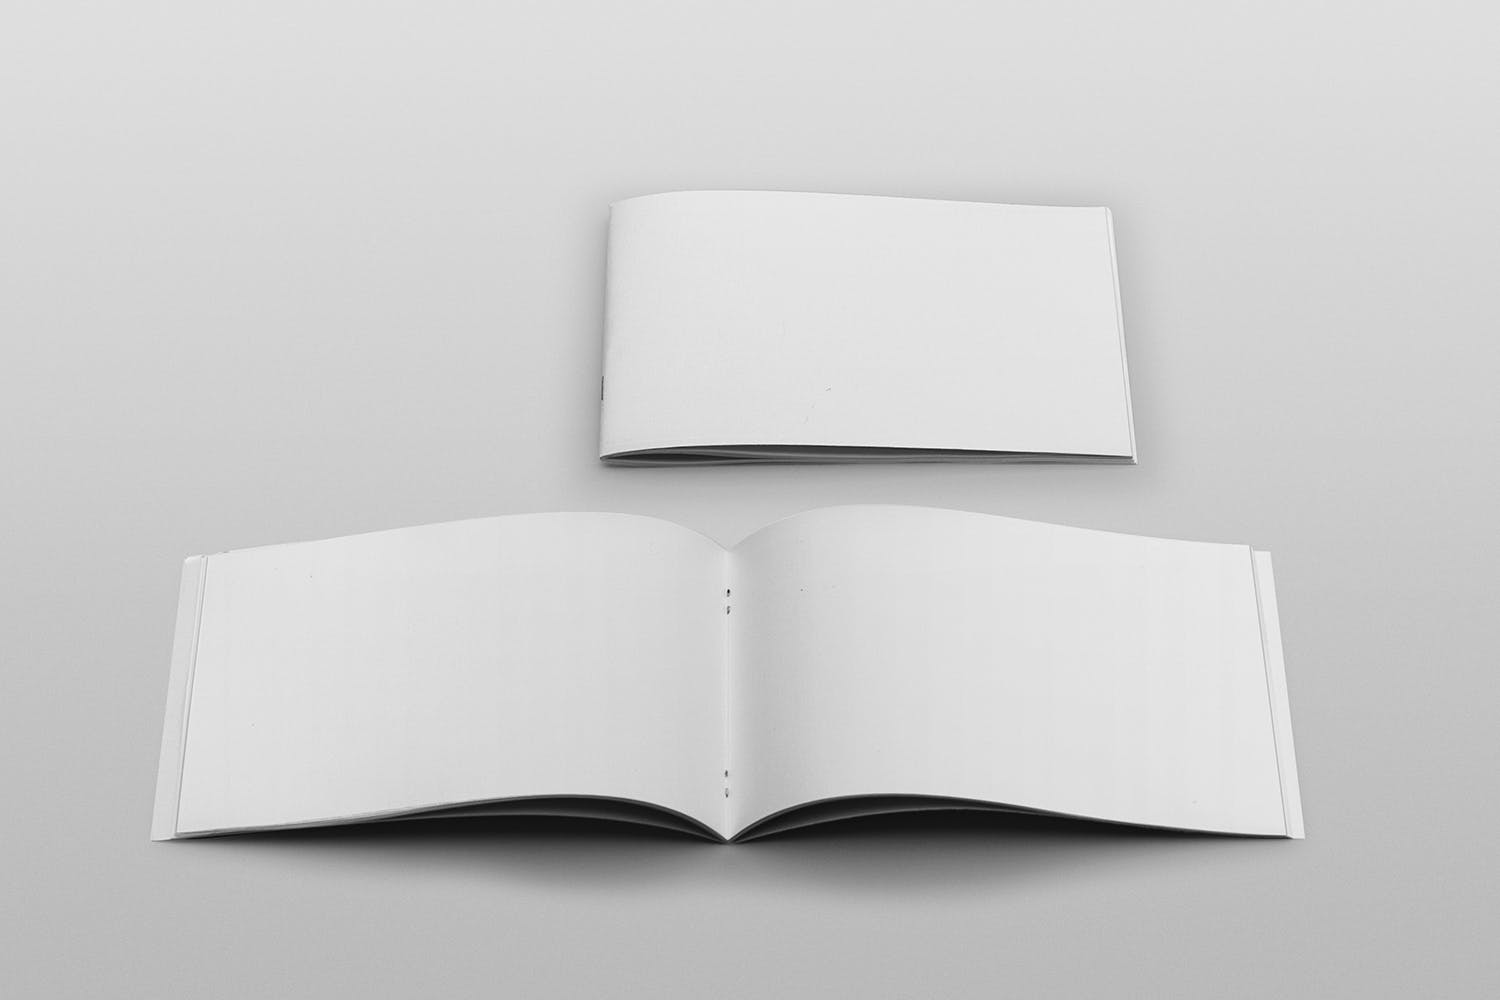 企业画册产品手册封面&内页版式设计正视图样机第一素材精选 Cover & Open Landscape Brochure Mockup Front View插图(1)